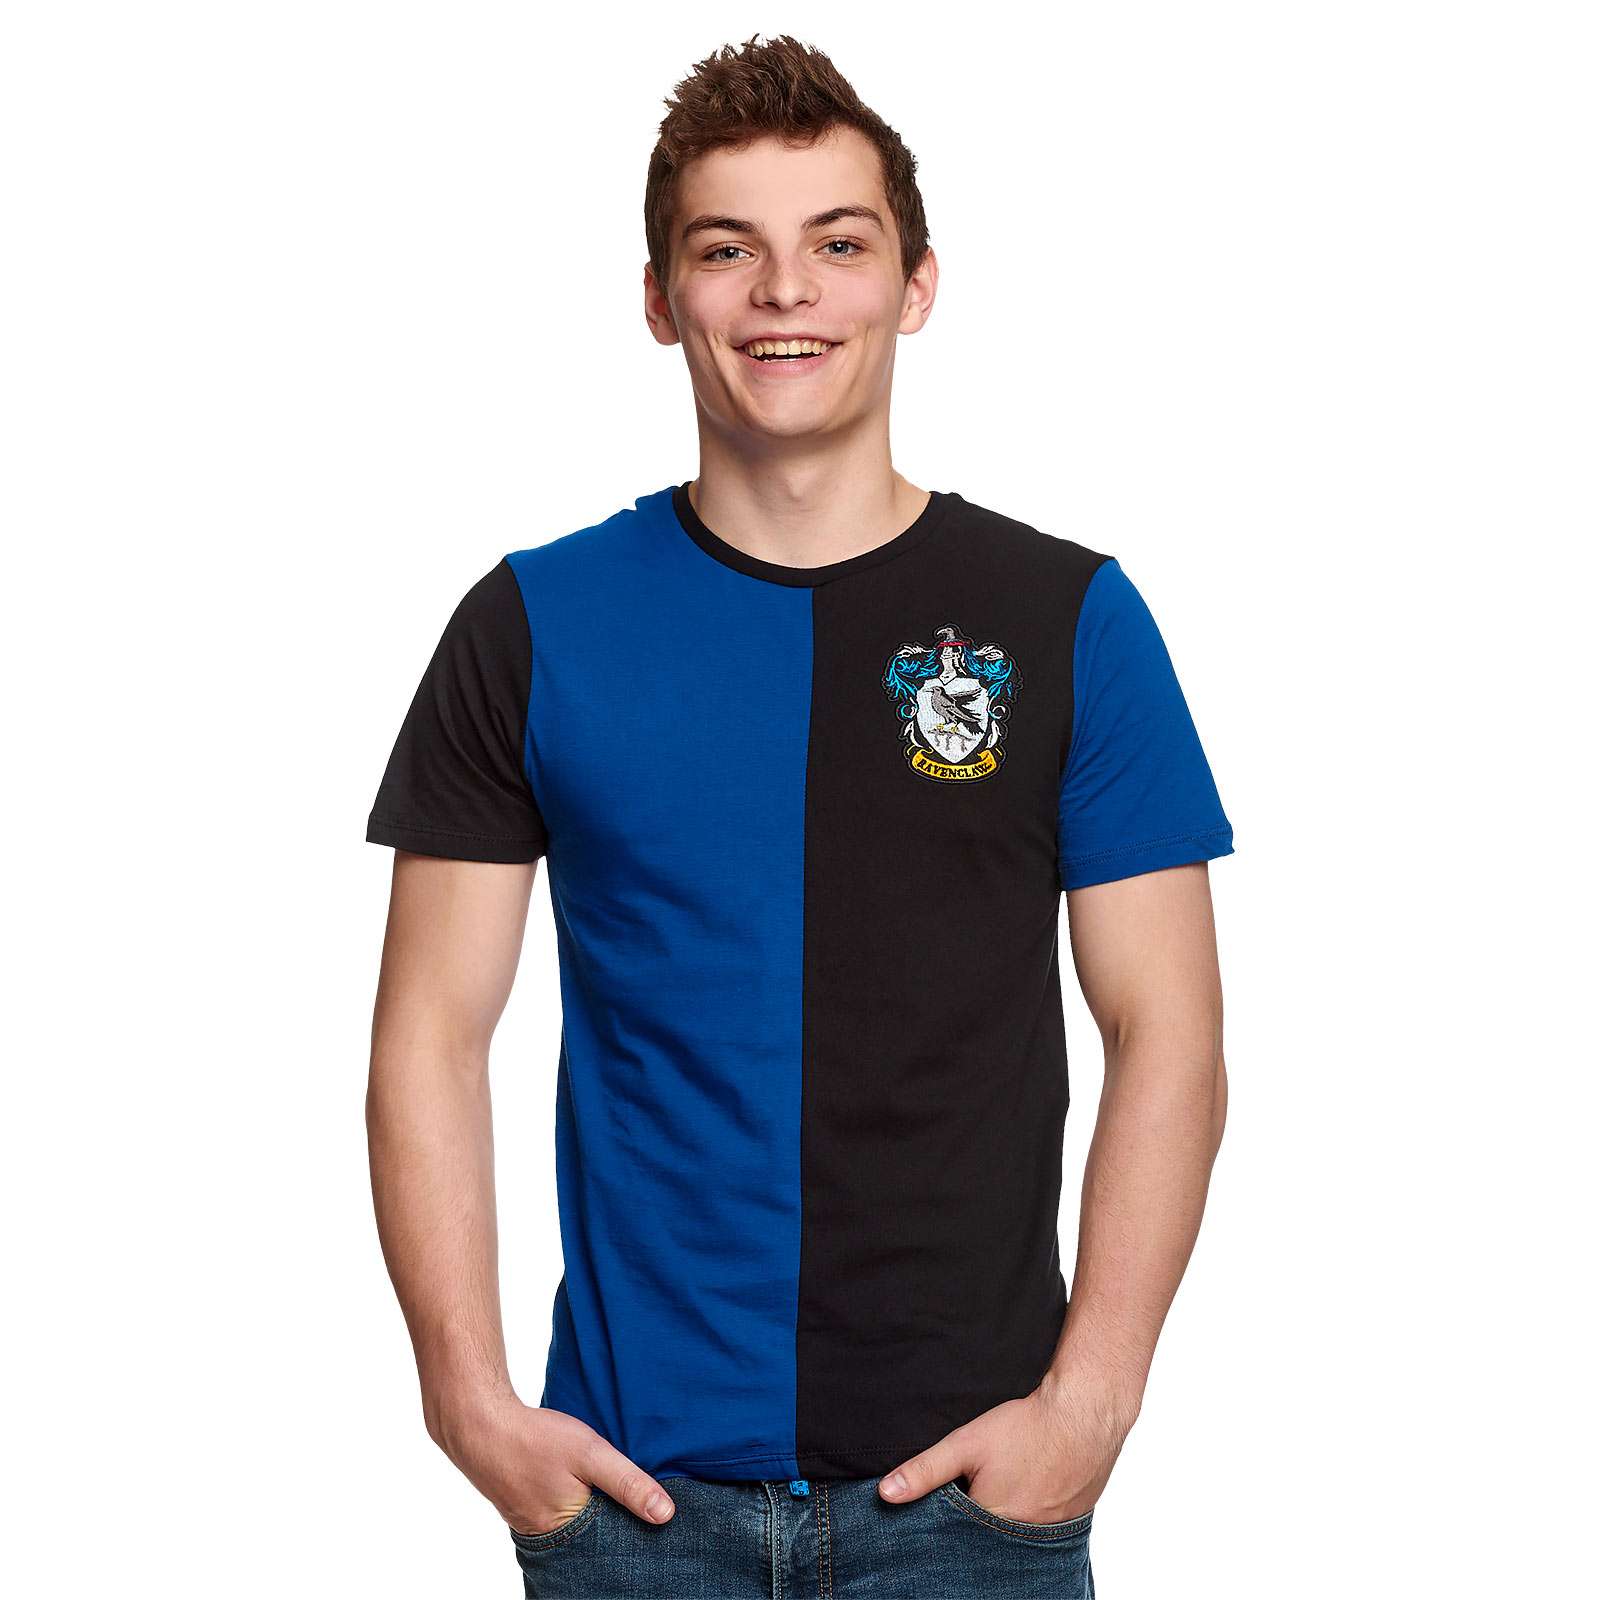 Harry Potter - Ravenclaw Toernooi T-shirt blauw-zwart